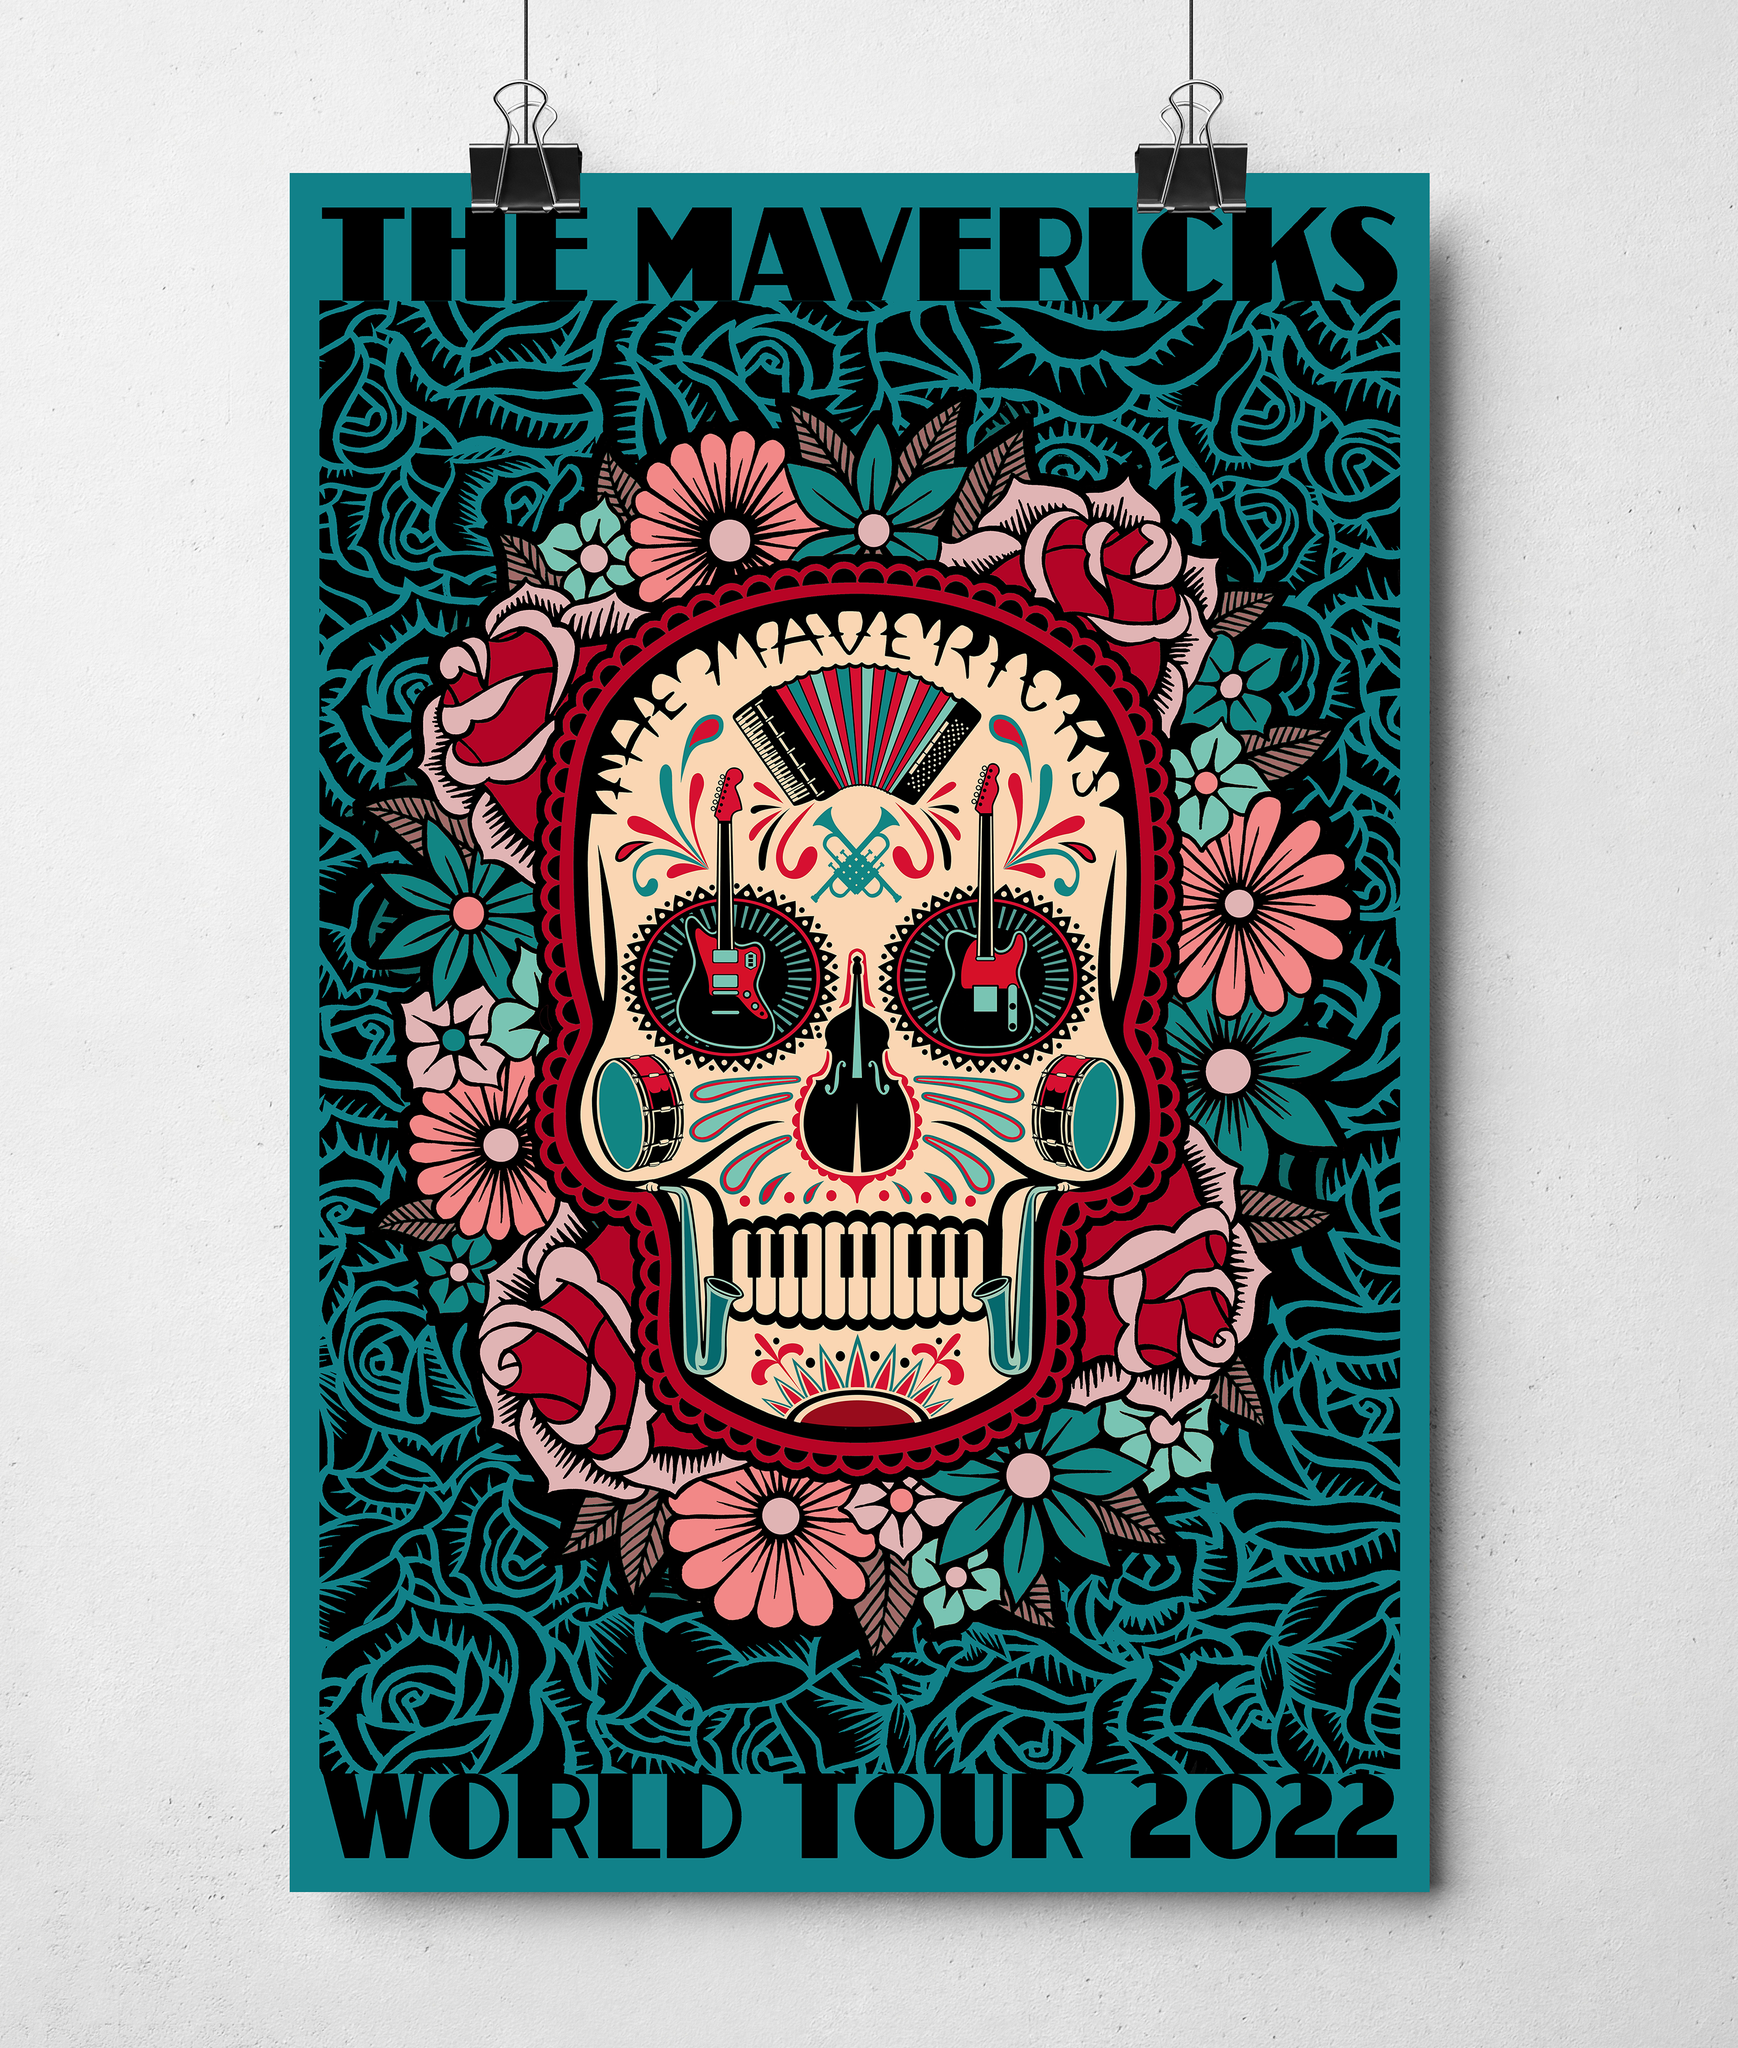 The Mavericks World Tour 2022 Poster - 2nd Edition